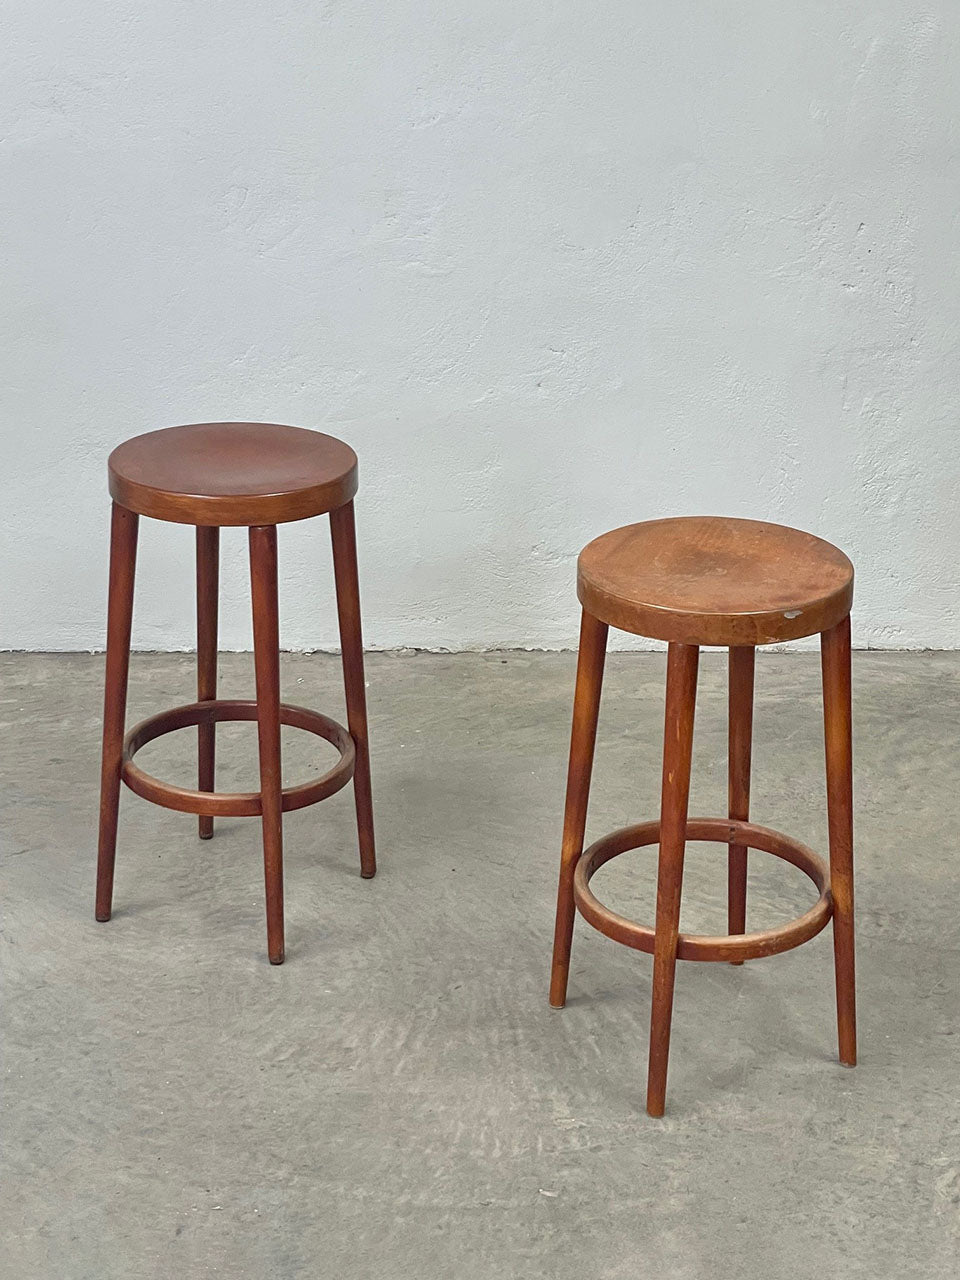 Pair of Baumann stools